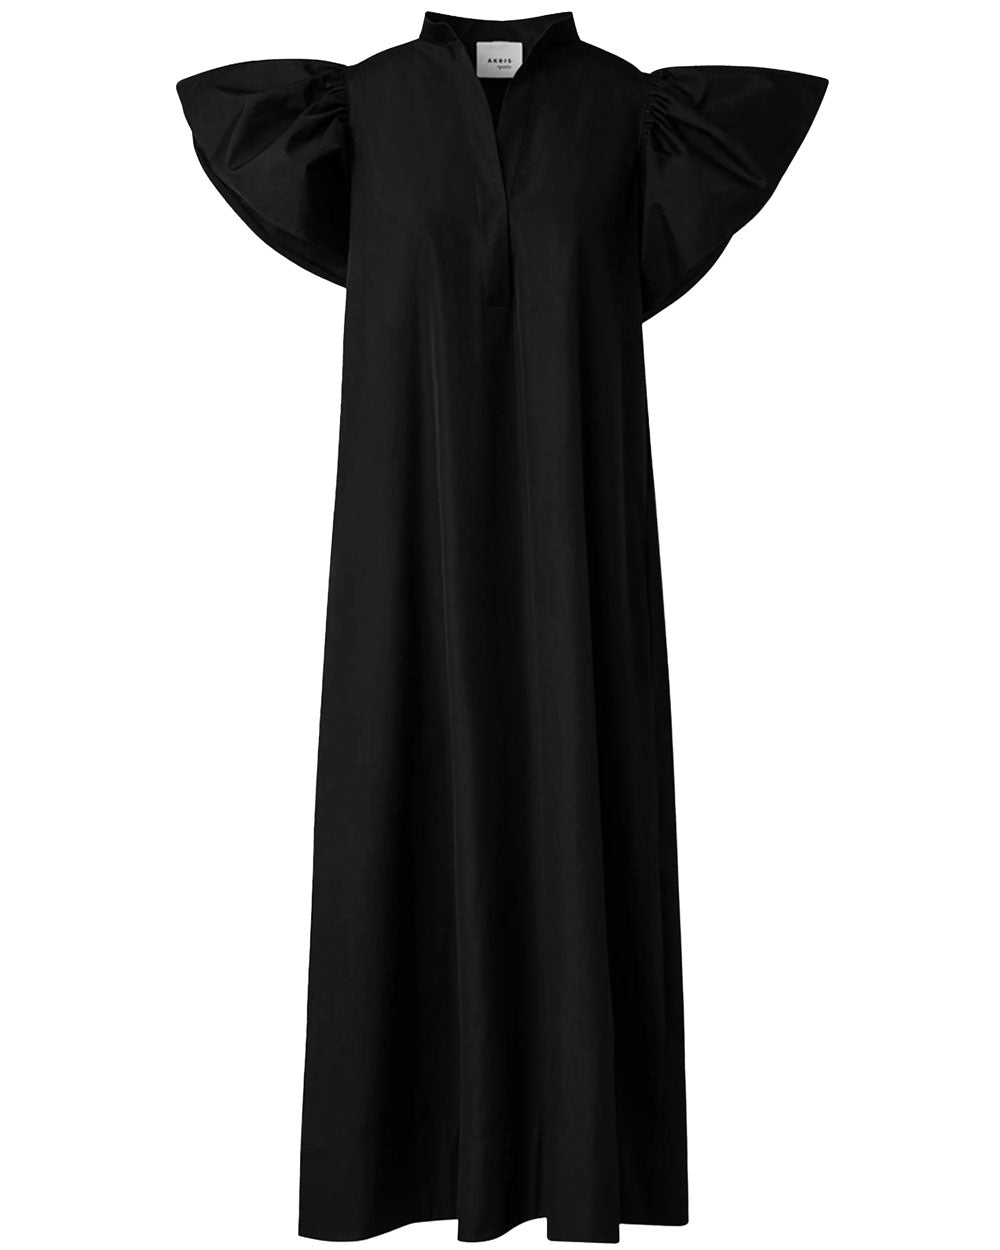 Black Wing Sleeve Midi Dress